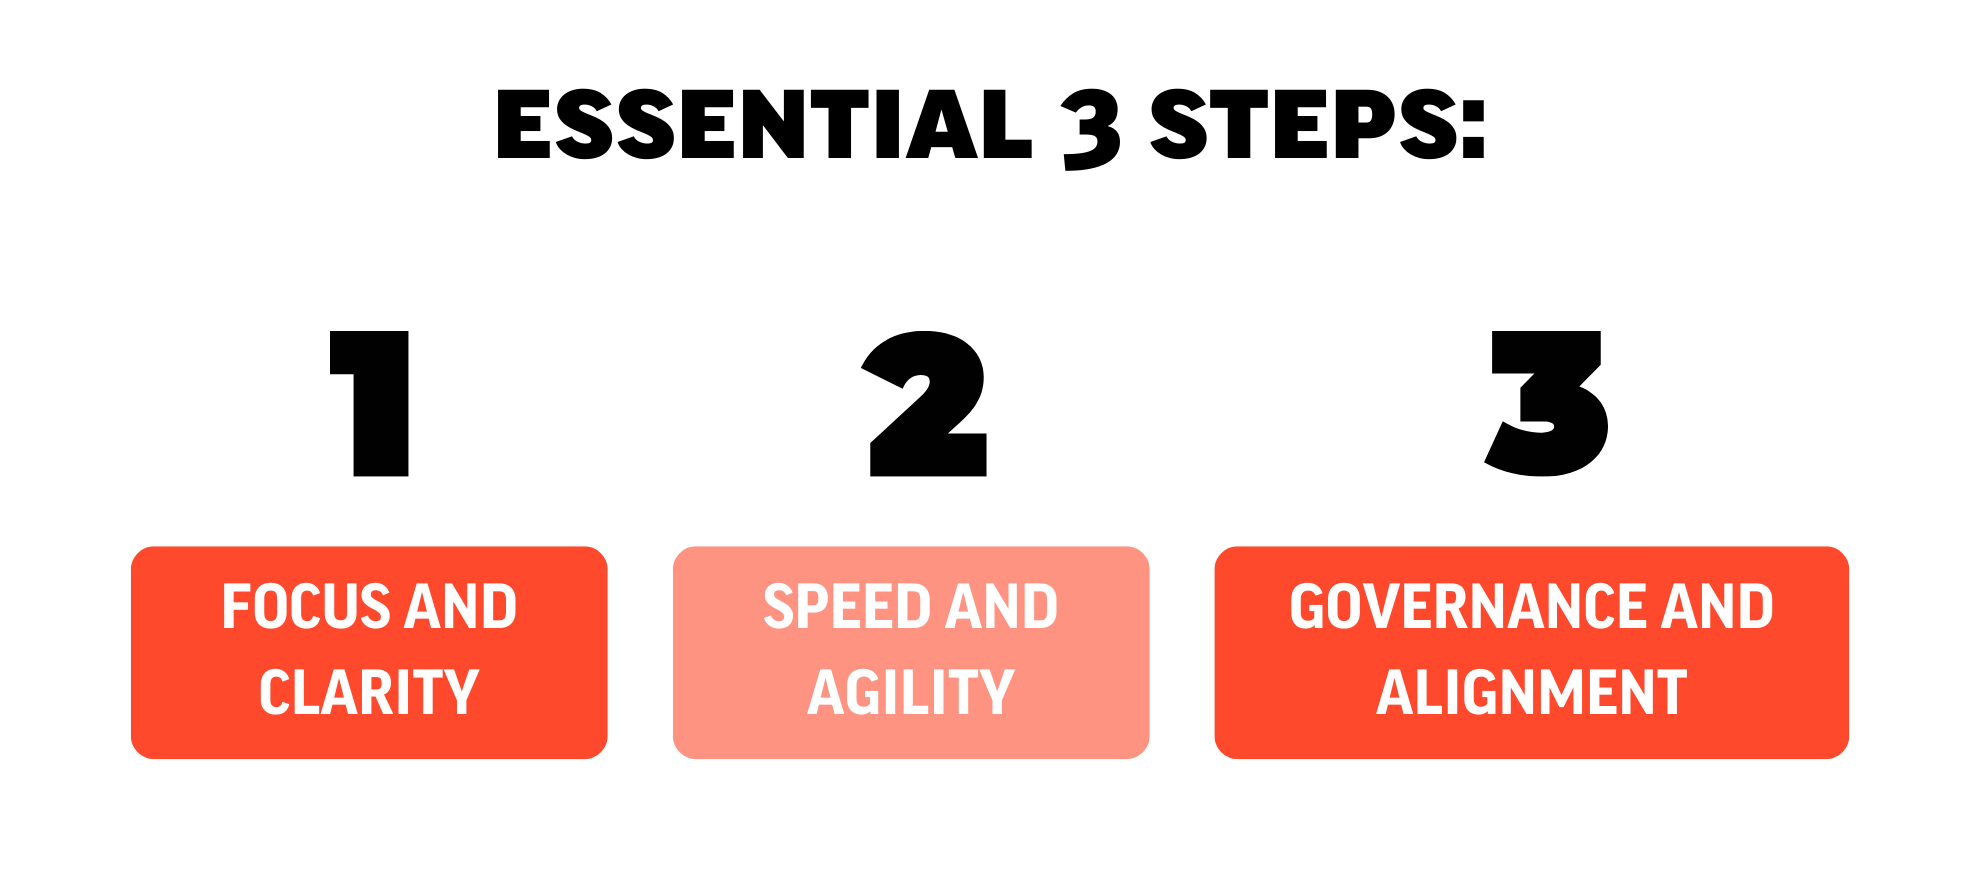 Essential 3 Steps to Execution